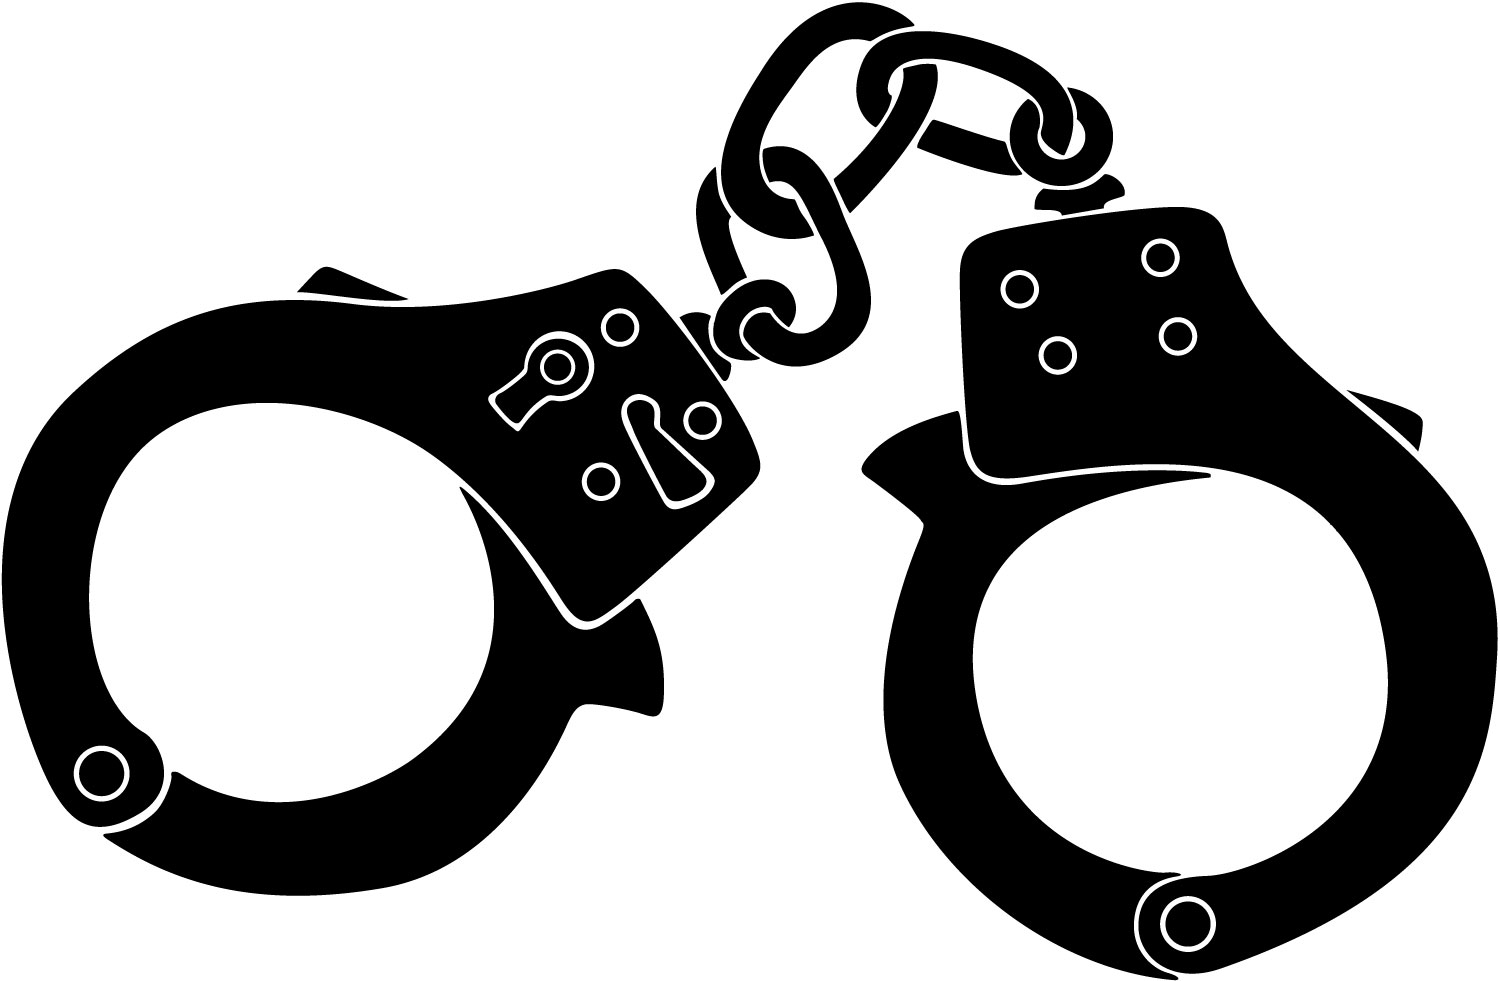 Free handcuffs cliparts.